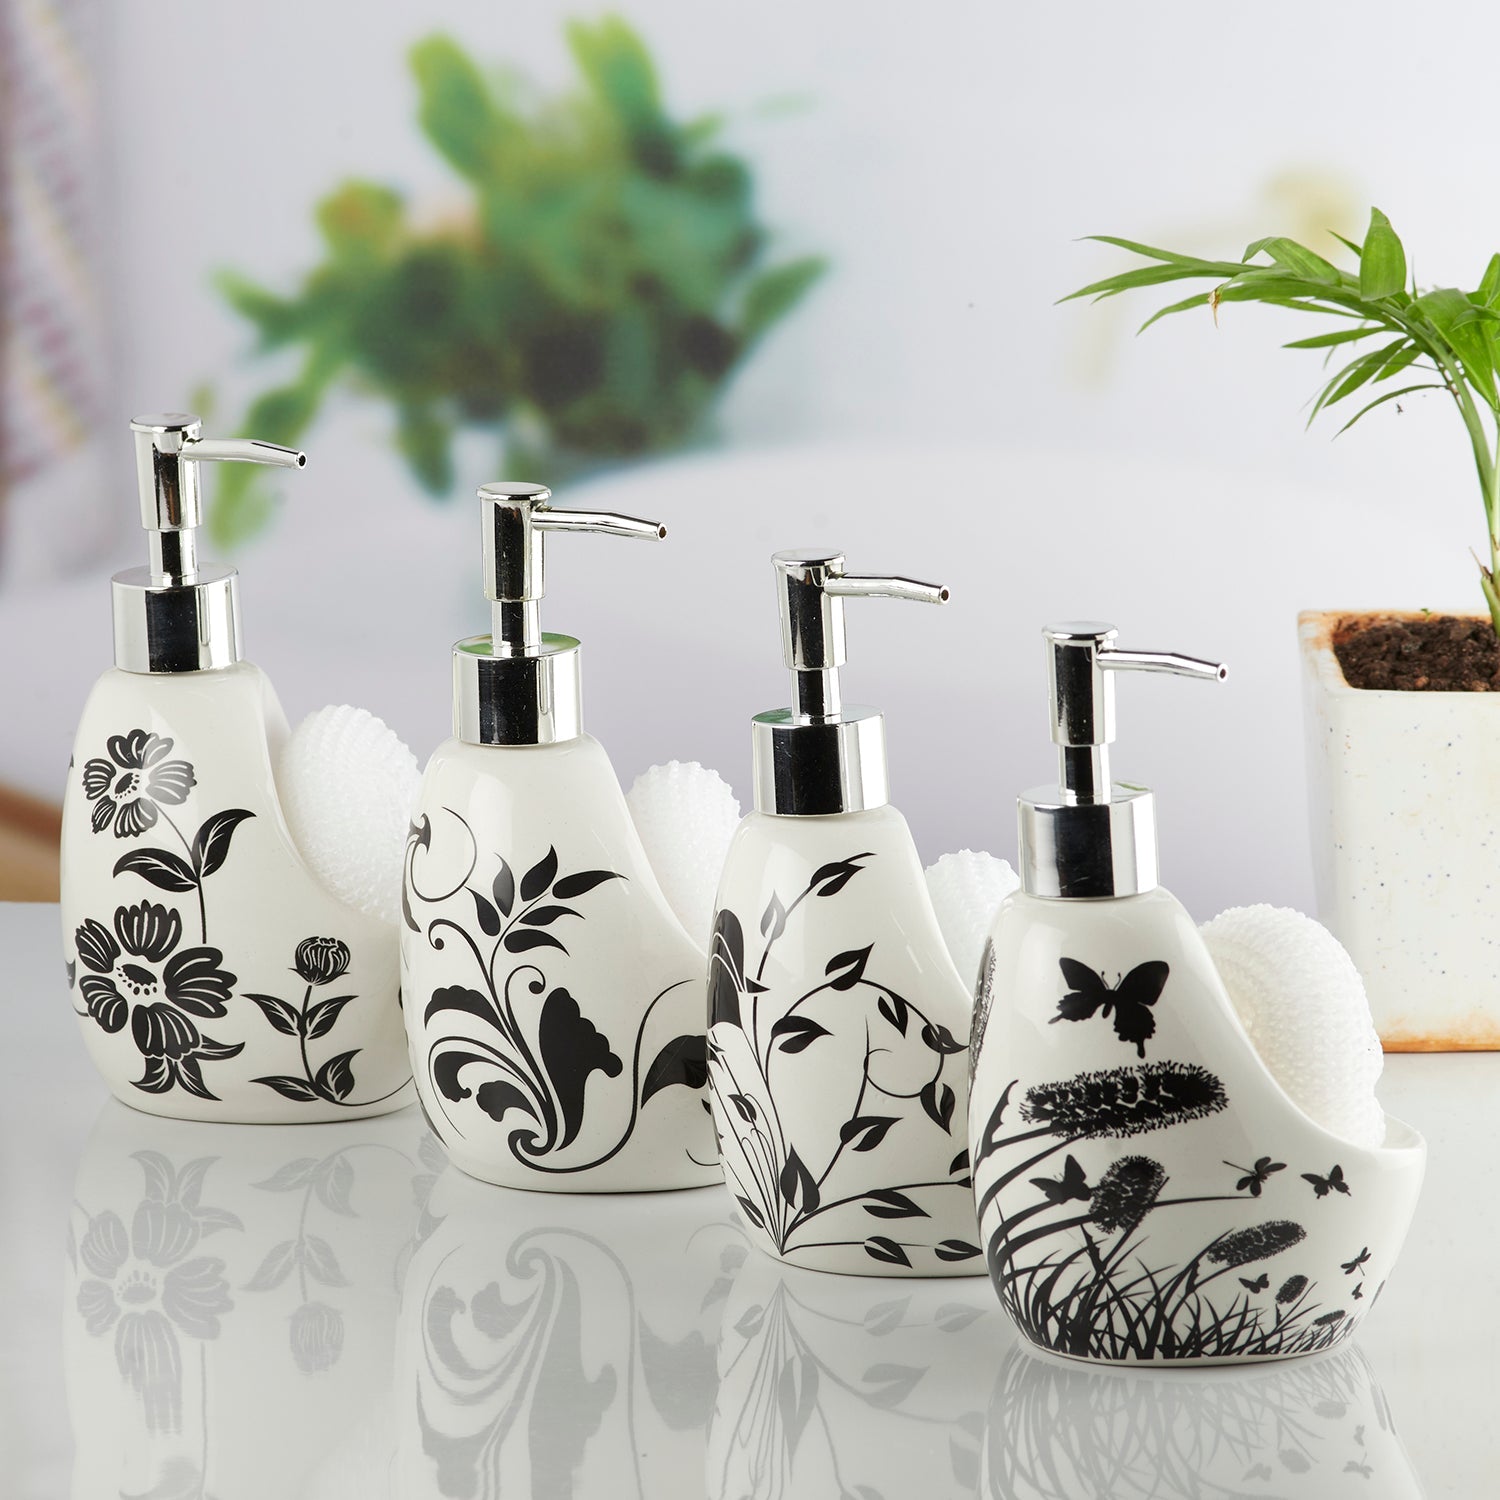 Ceramic Soap Dispenser handwash Pump for Bathroom, Set of 1, White/Black (10302)